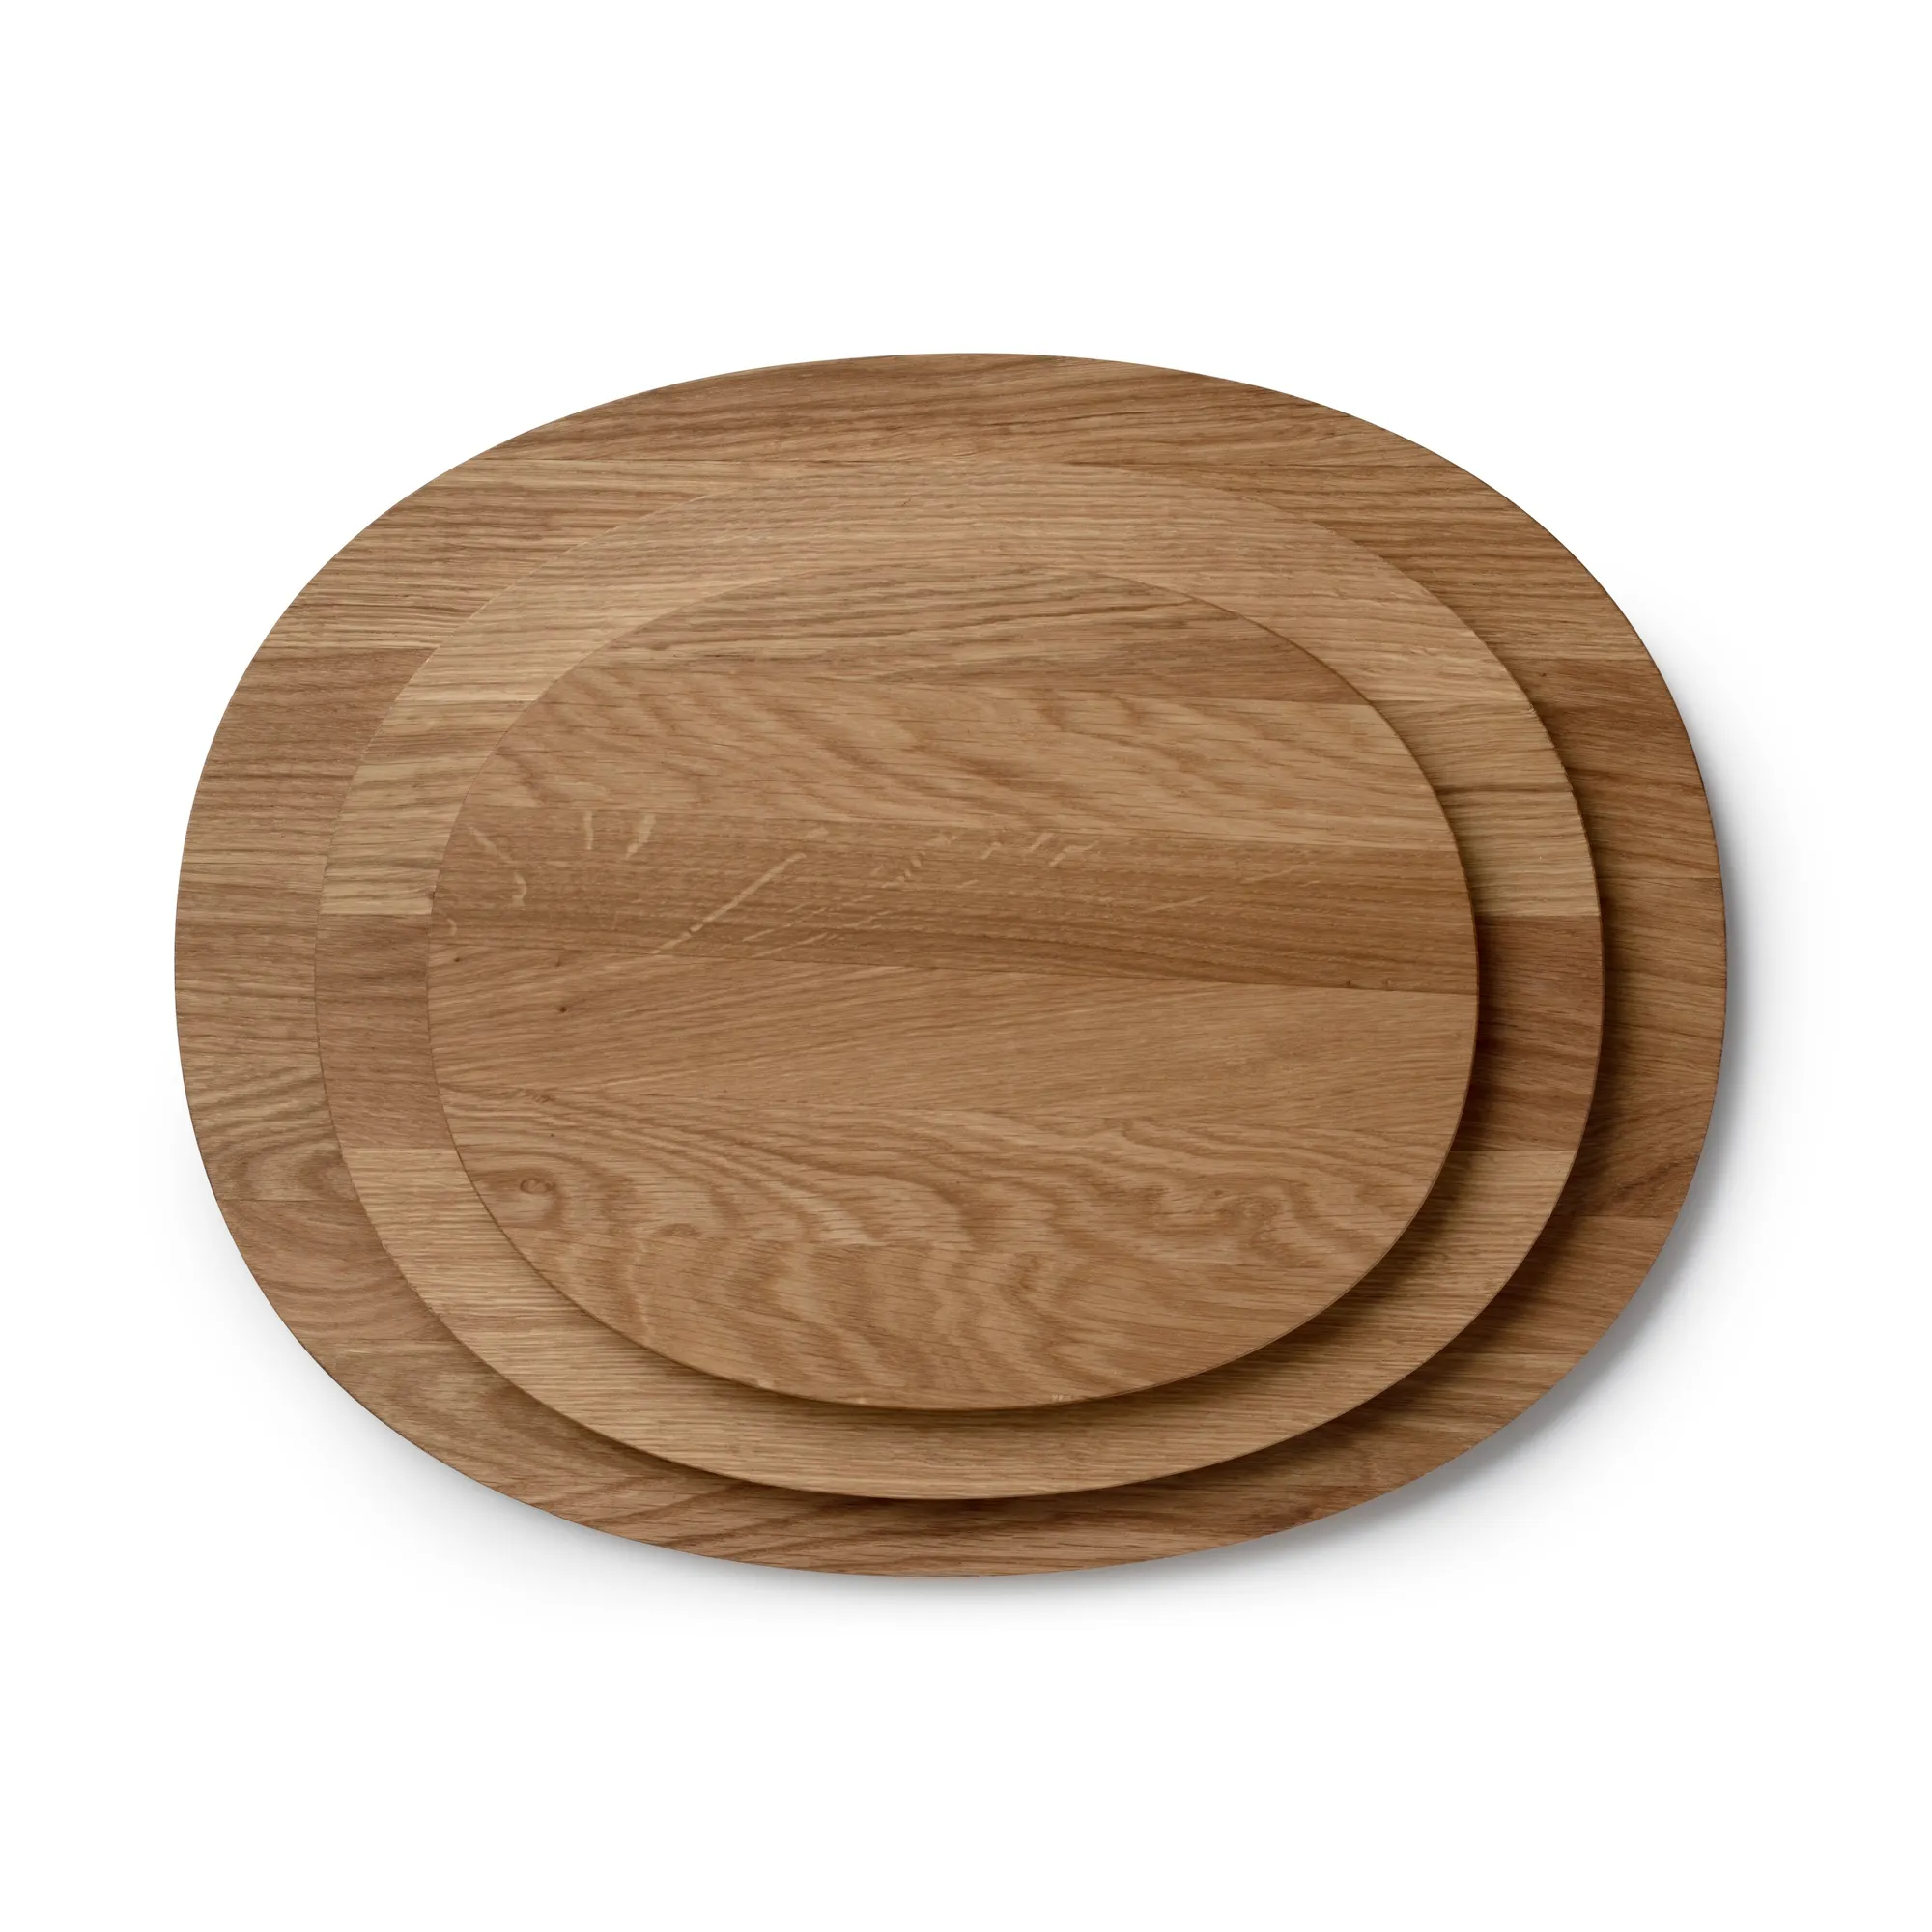 Raami serving tray Iittala 38,5 cm oak